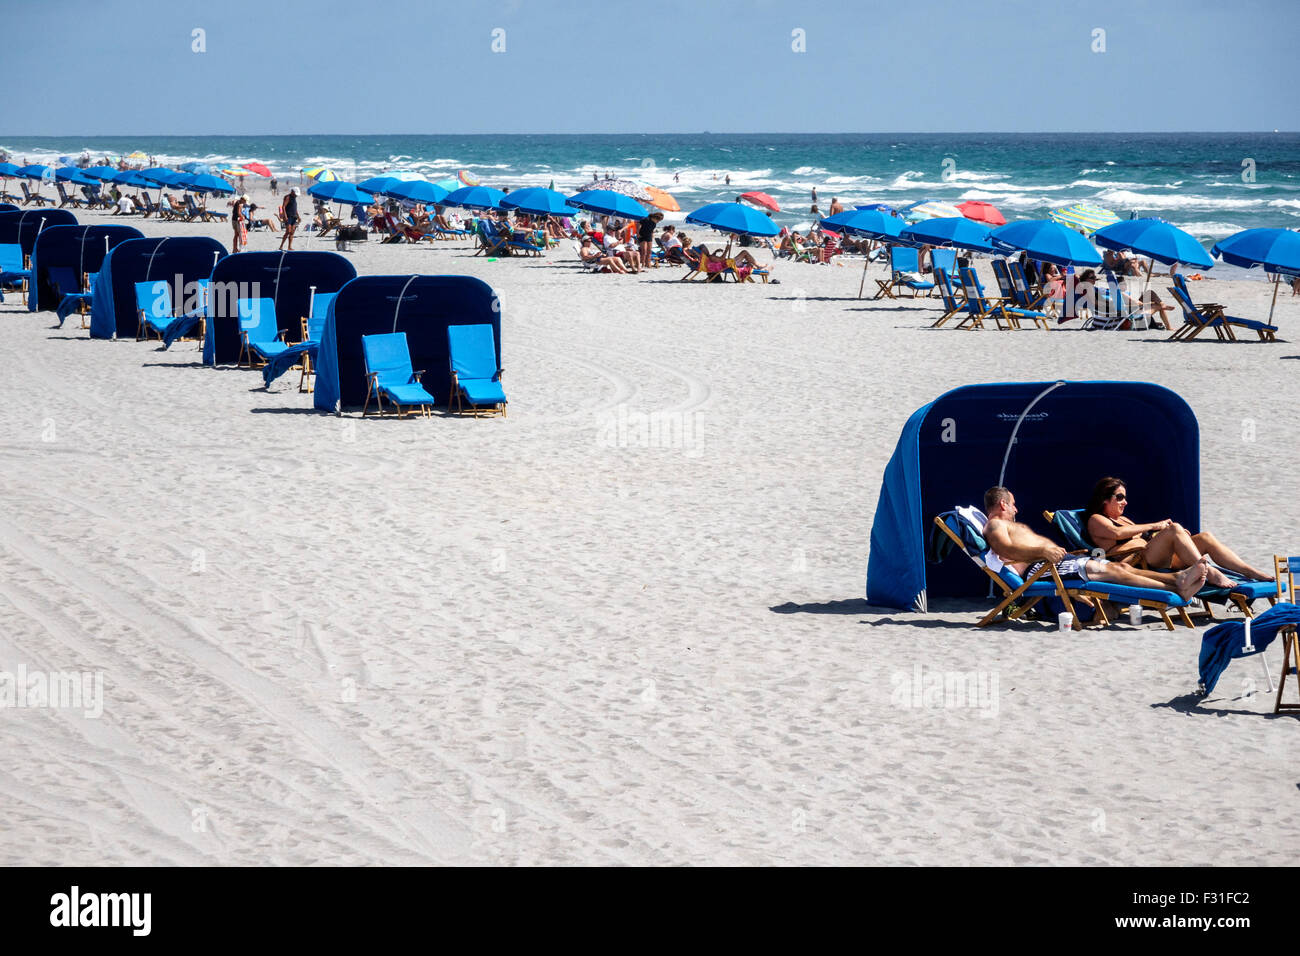 Palm Beach Florida, Manalapan, pubblico, Oceano Atlantico, palme, noleggio capanne, ombrelloni, sabbia, FL150415005 Foto Stock